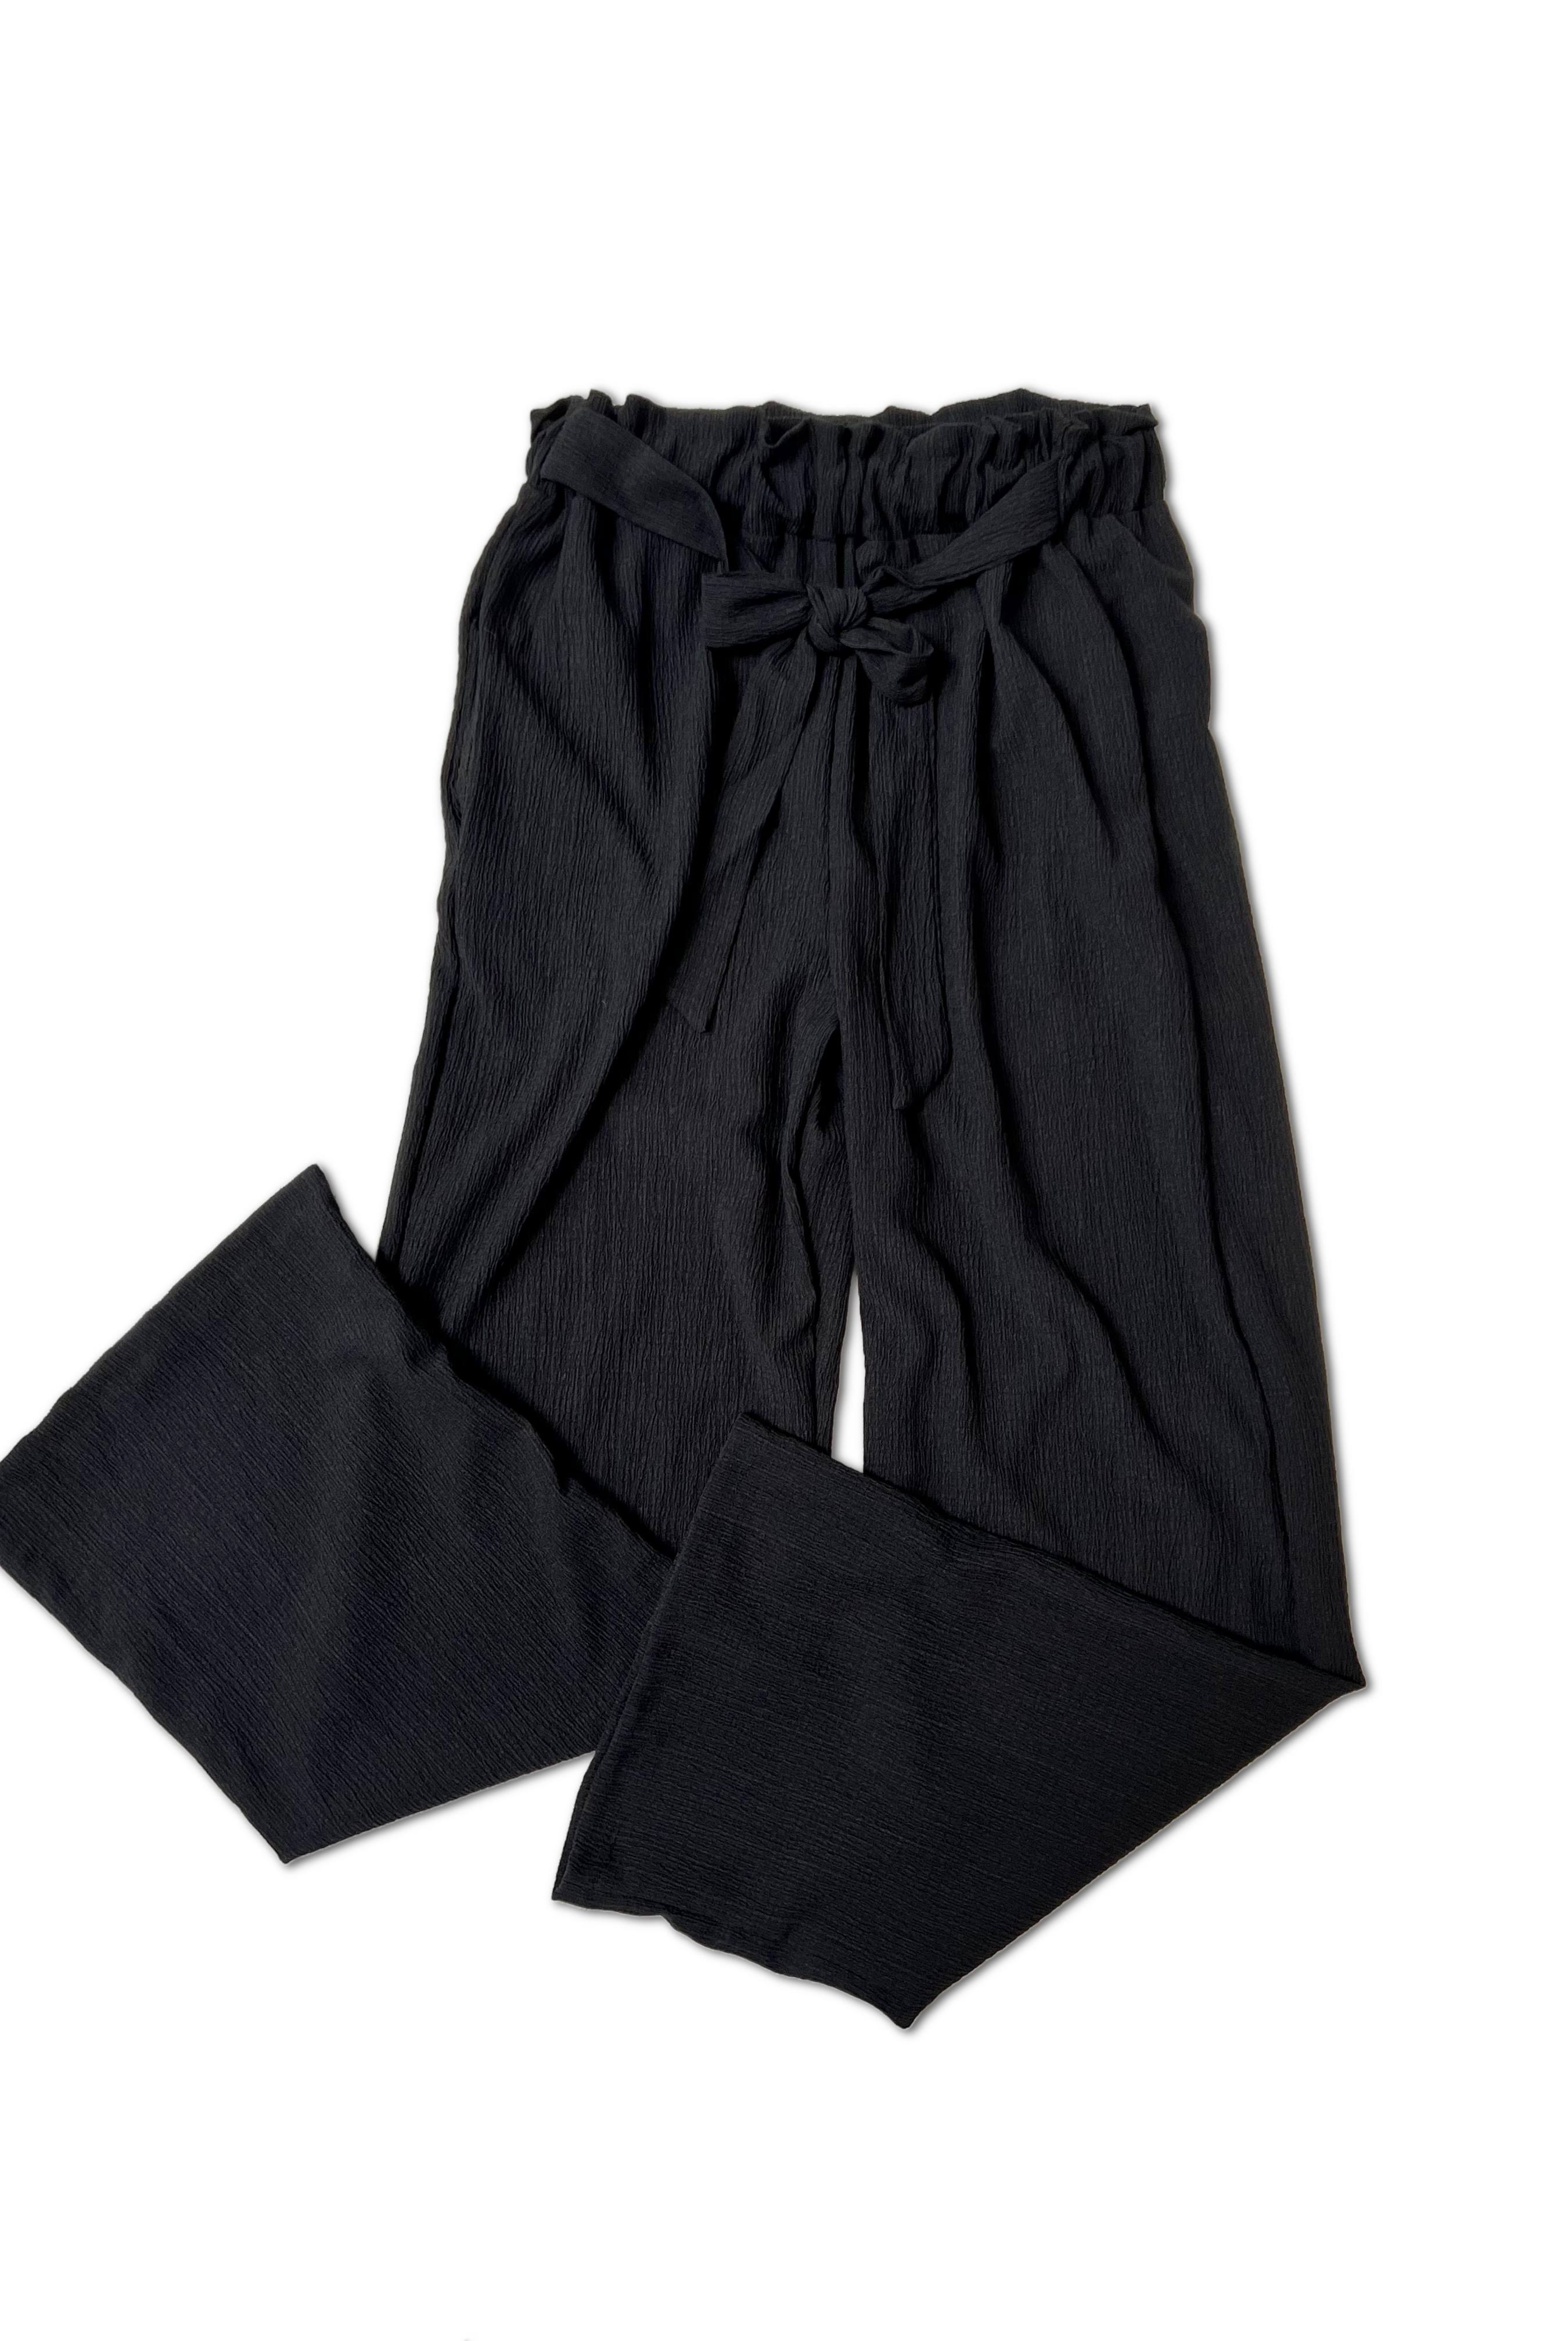 Chic Casual - Wide Leg Pants-Boutique Simplified-Urban Threadz Boutique, Women's Fashion Boutique in Saugatuck, MI